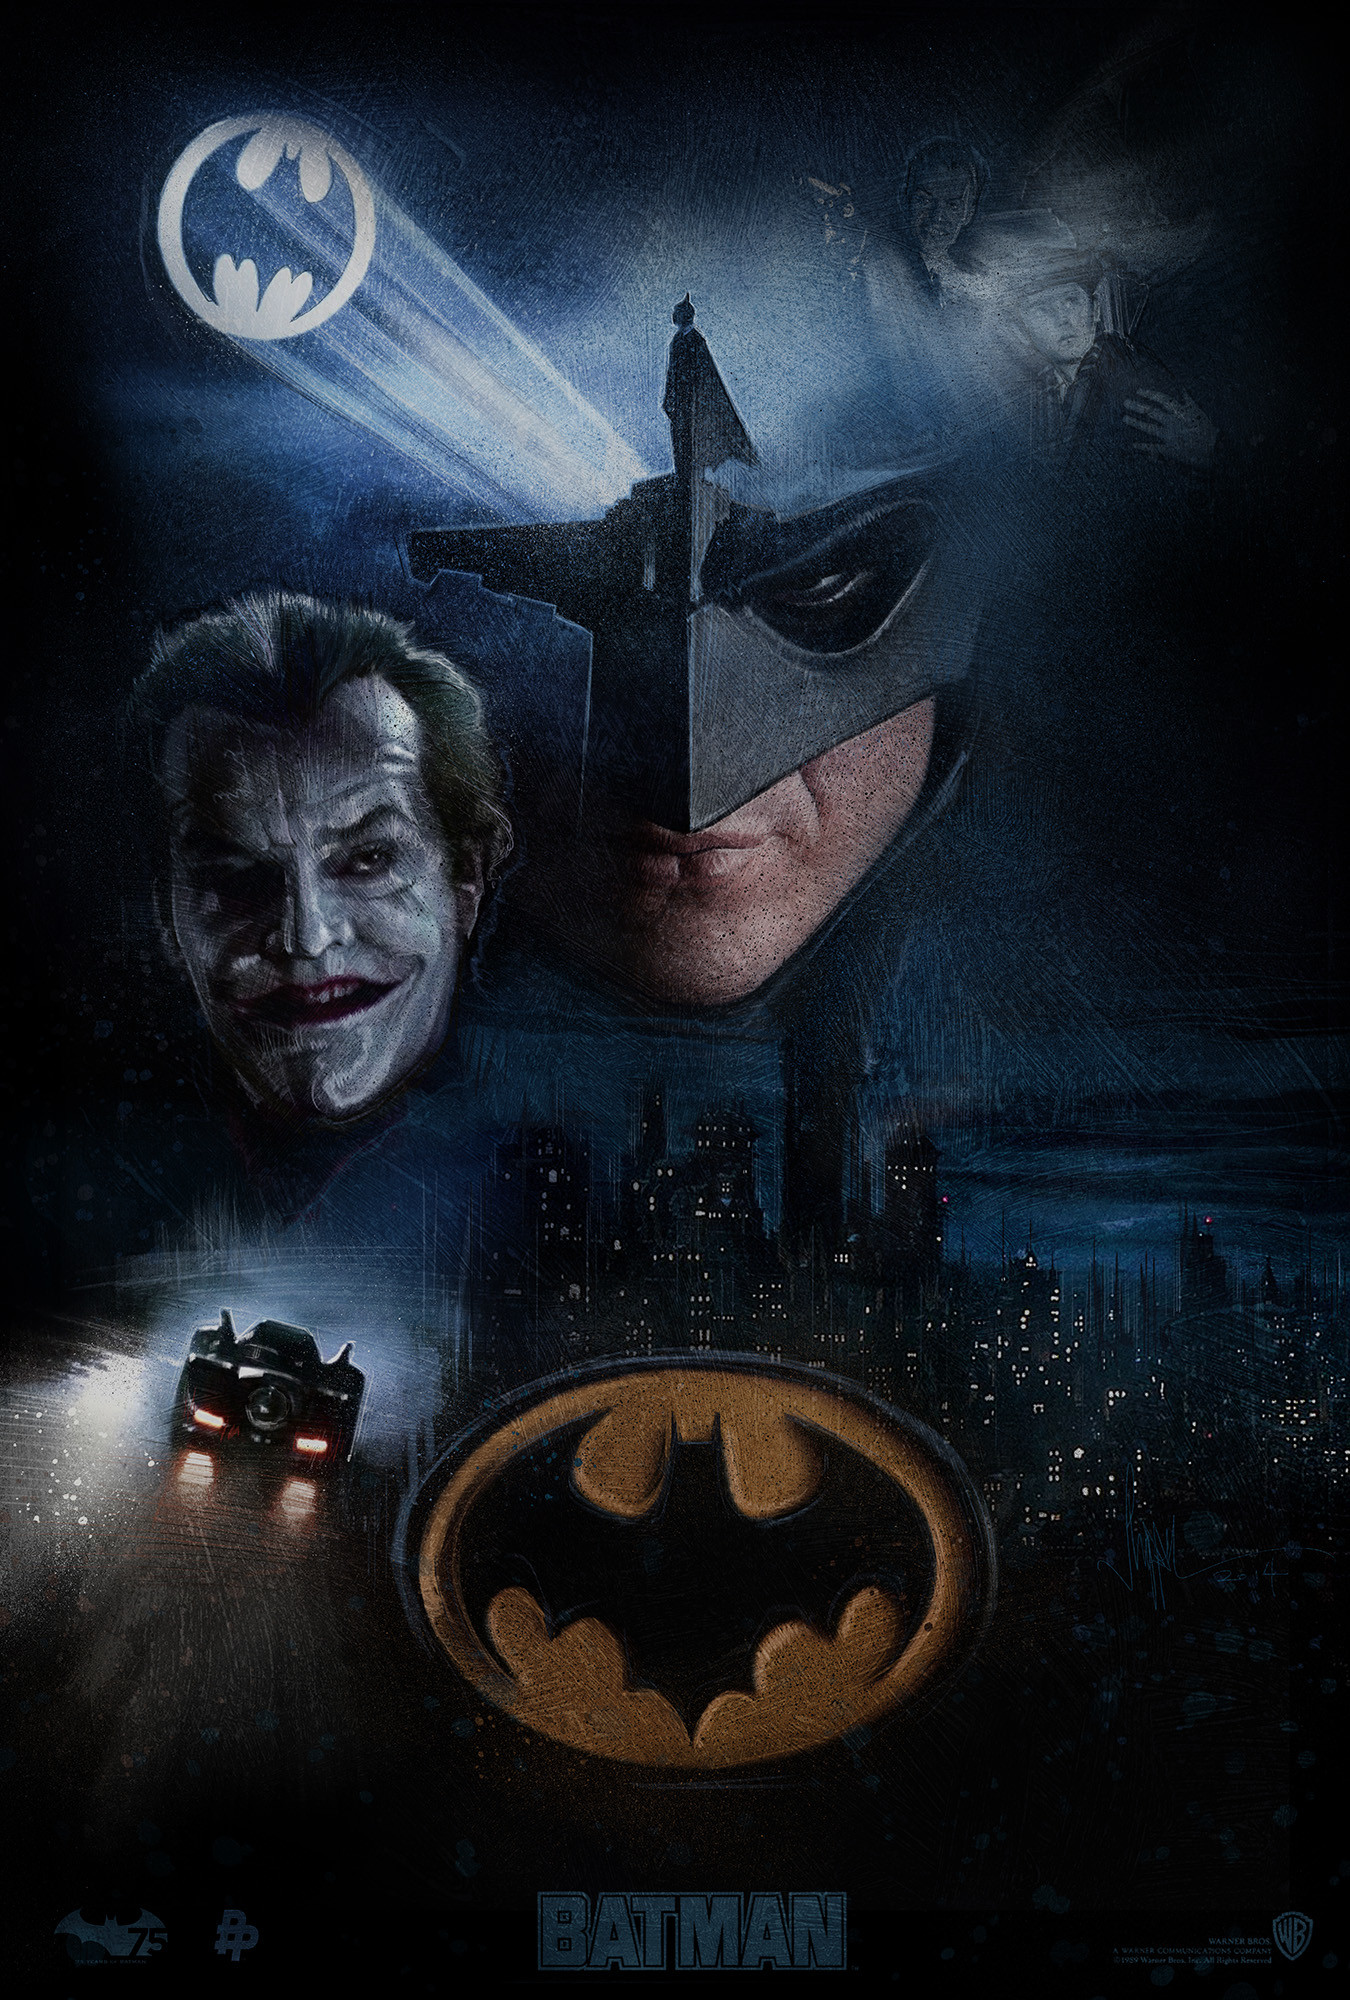 72 Batman 1989 Wallpapers On Wallpaperplay - 1989 Batman Movie Posters , HD Wallpaper & Backgrounds